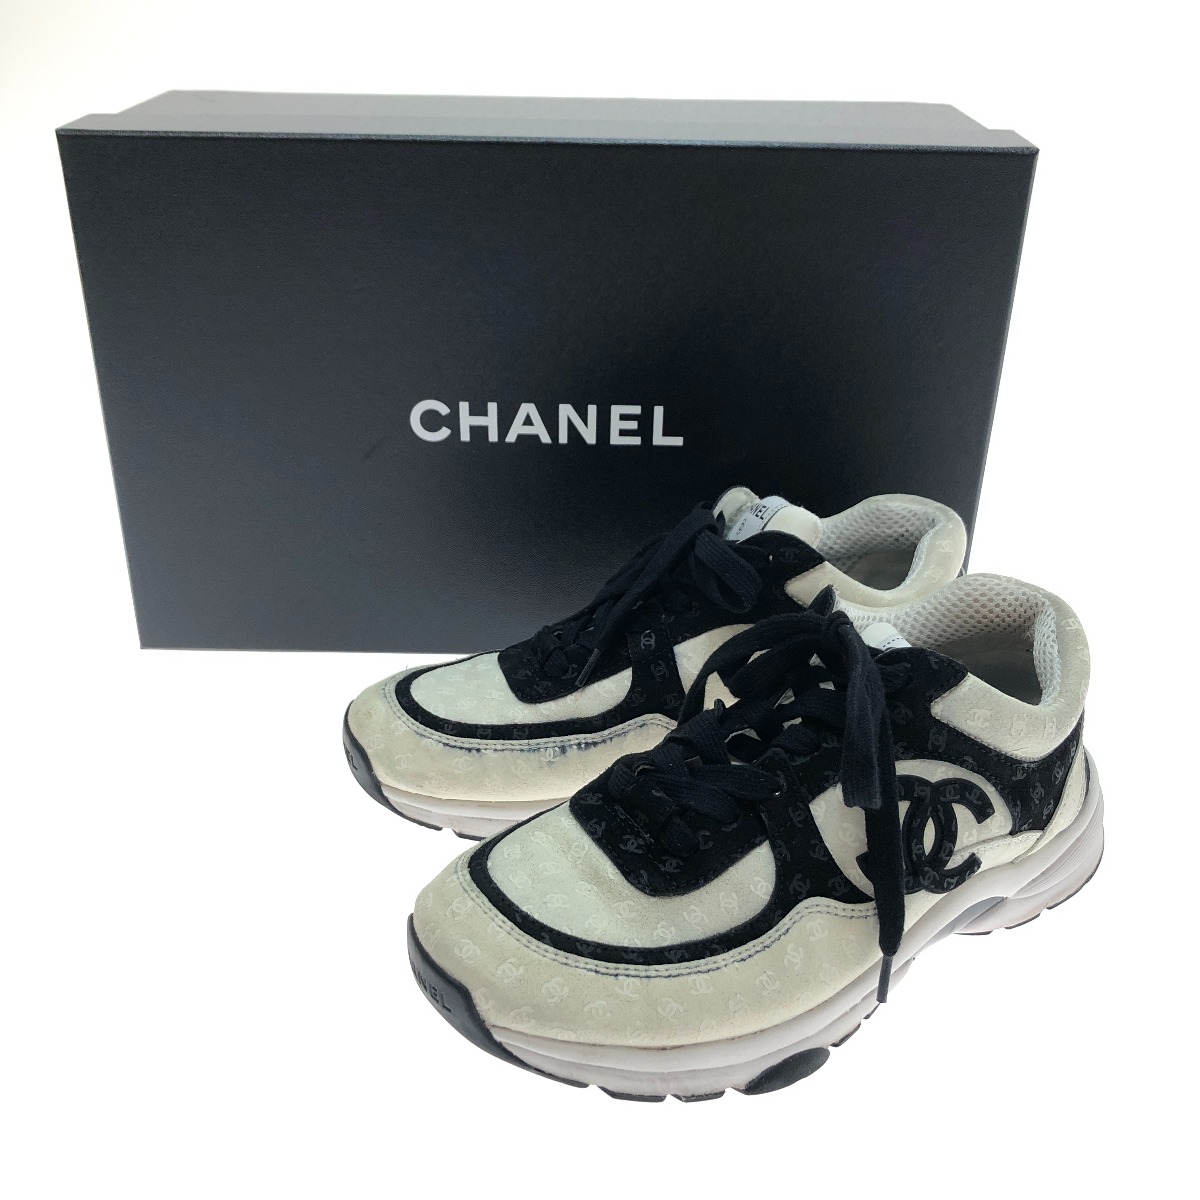 CHANEL シャネル 靴 スニーカー  SIZE 26cm(40) ホワイト×ブラック Bランク